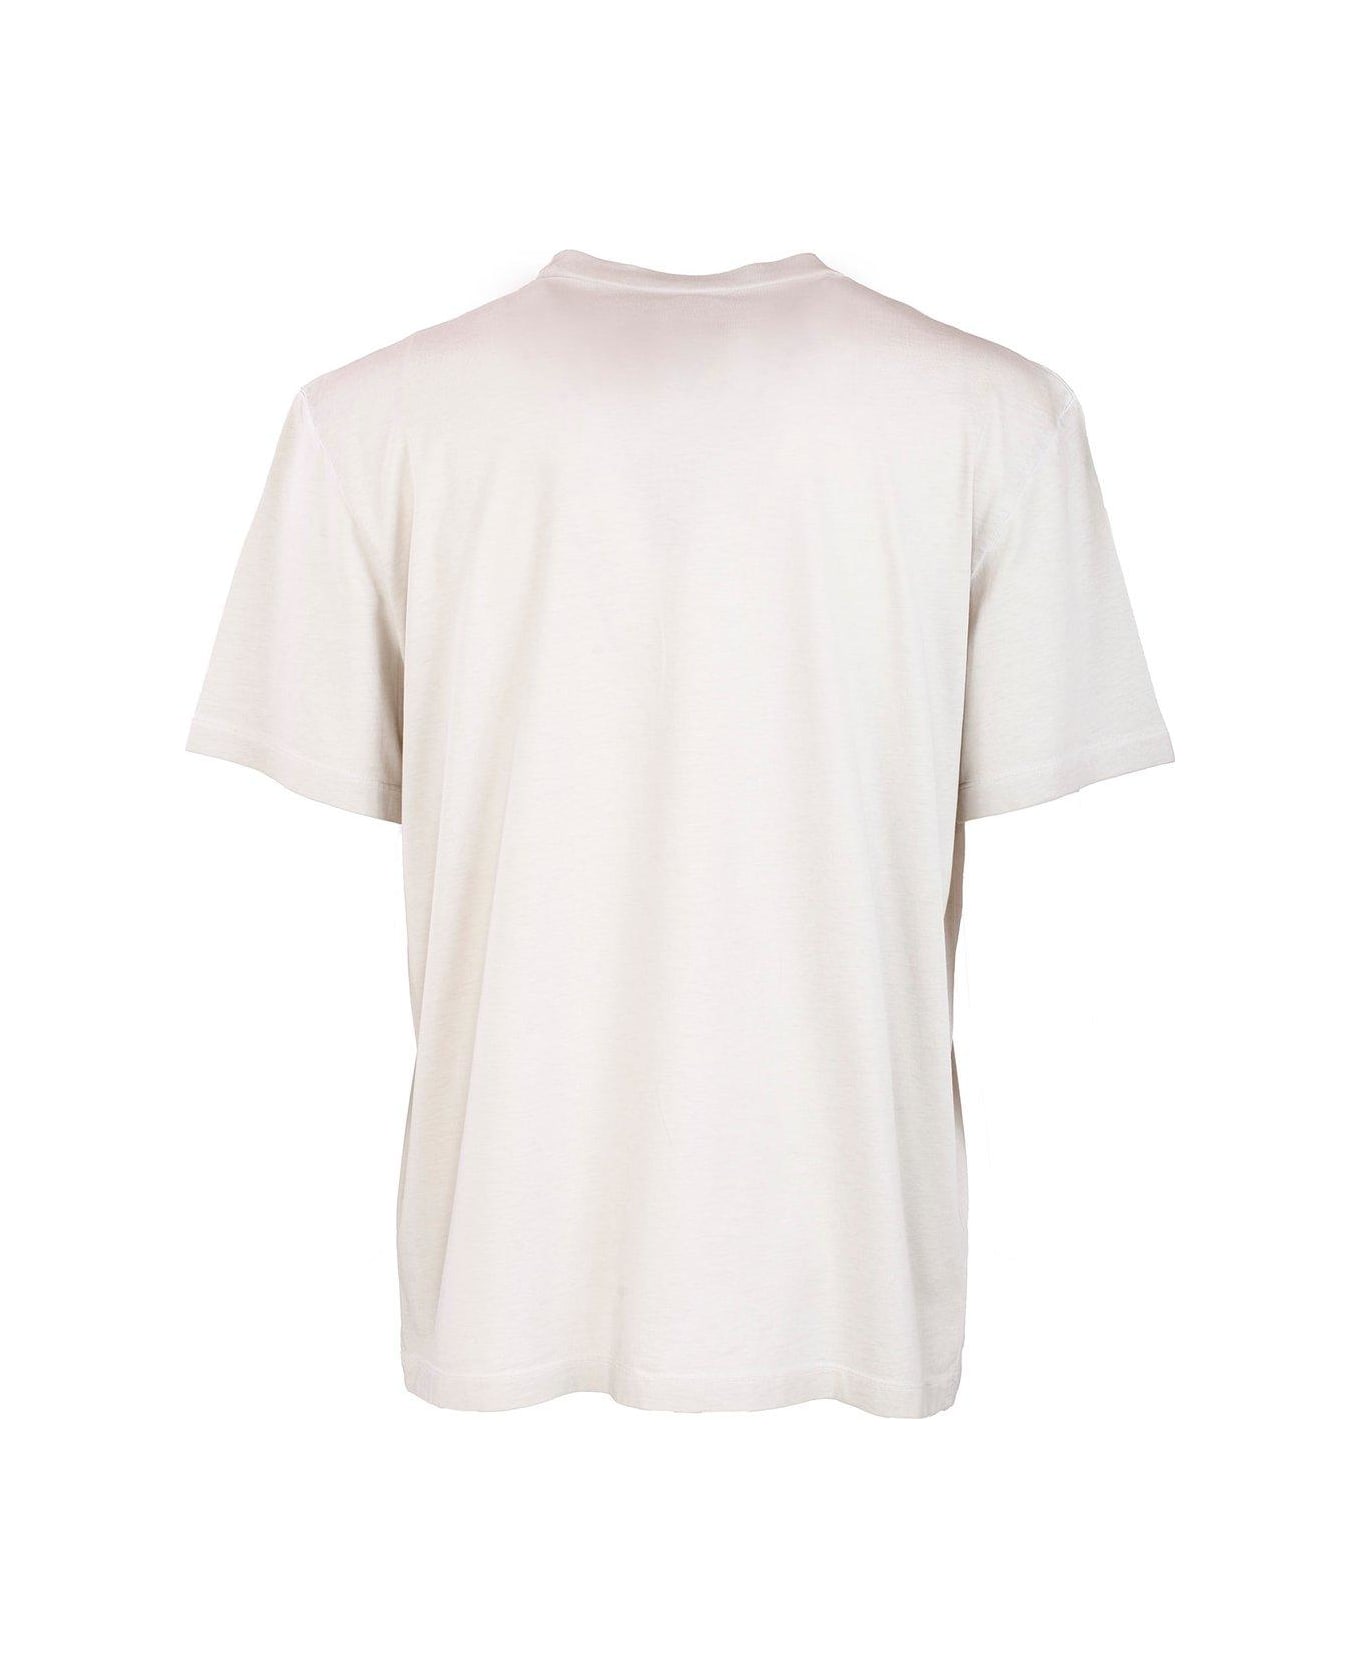 Dsquared2 Cotton Jersey T-shirt - Beige シャツ